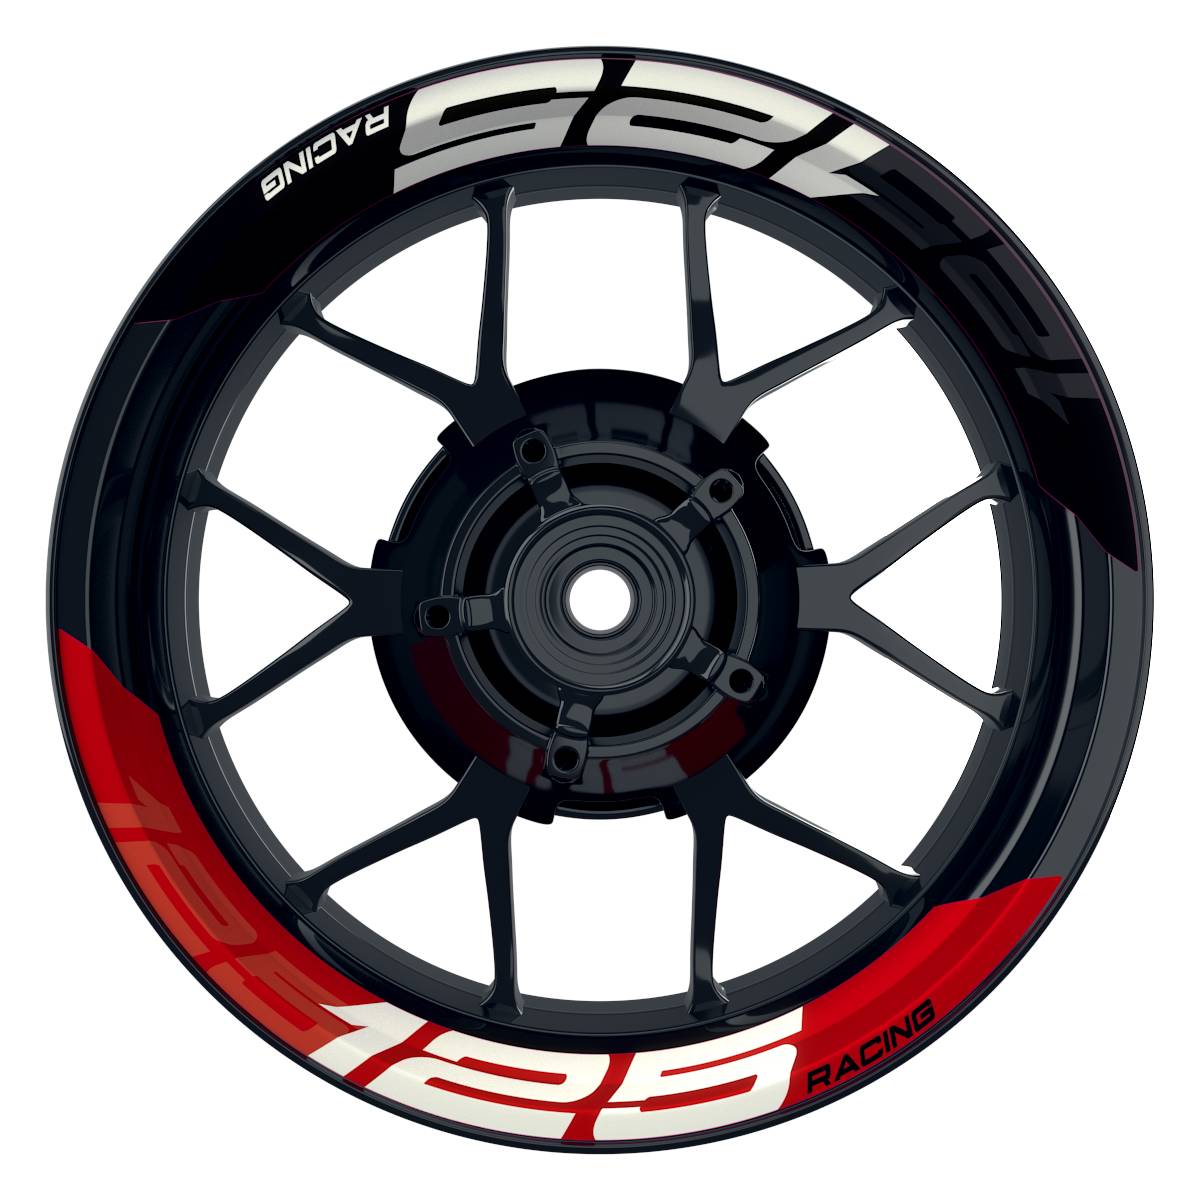 Wheelsticker Felgenaufkleber KTM Racing 125 halb halb V2 schwarz rot Frontansicht